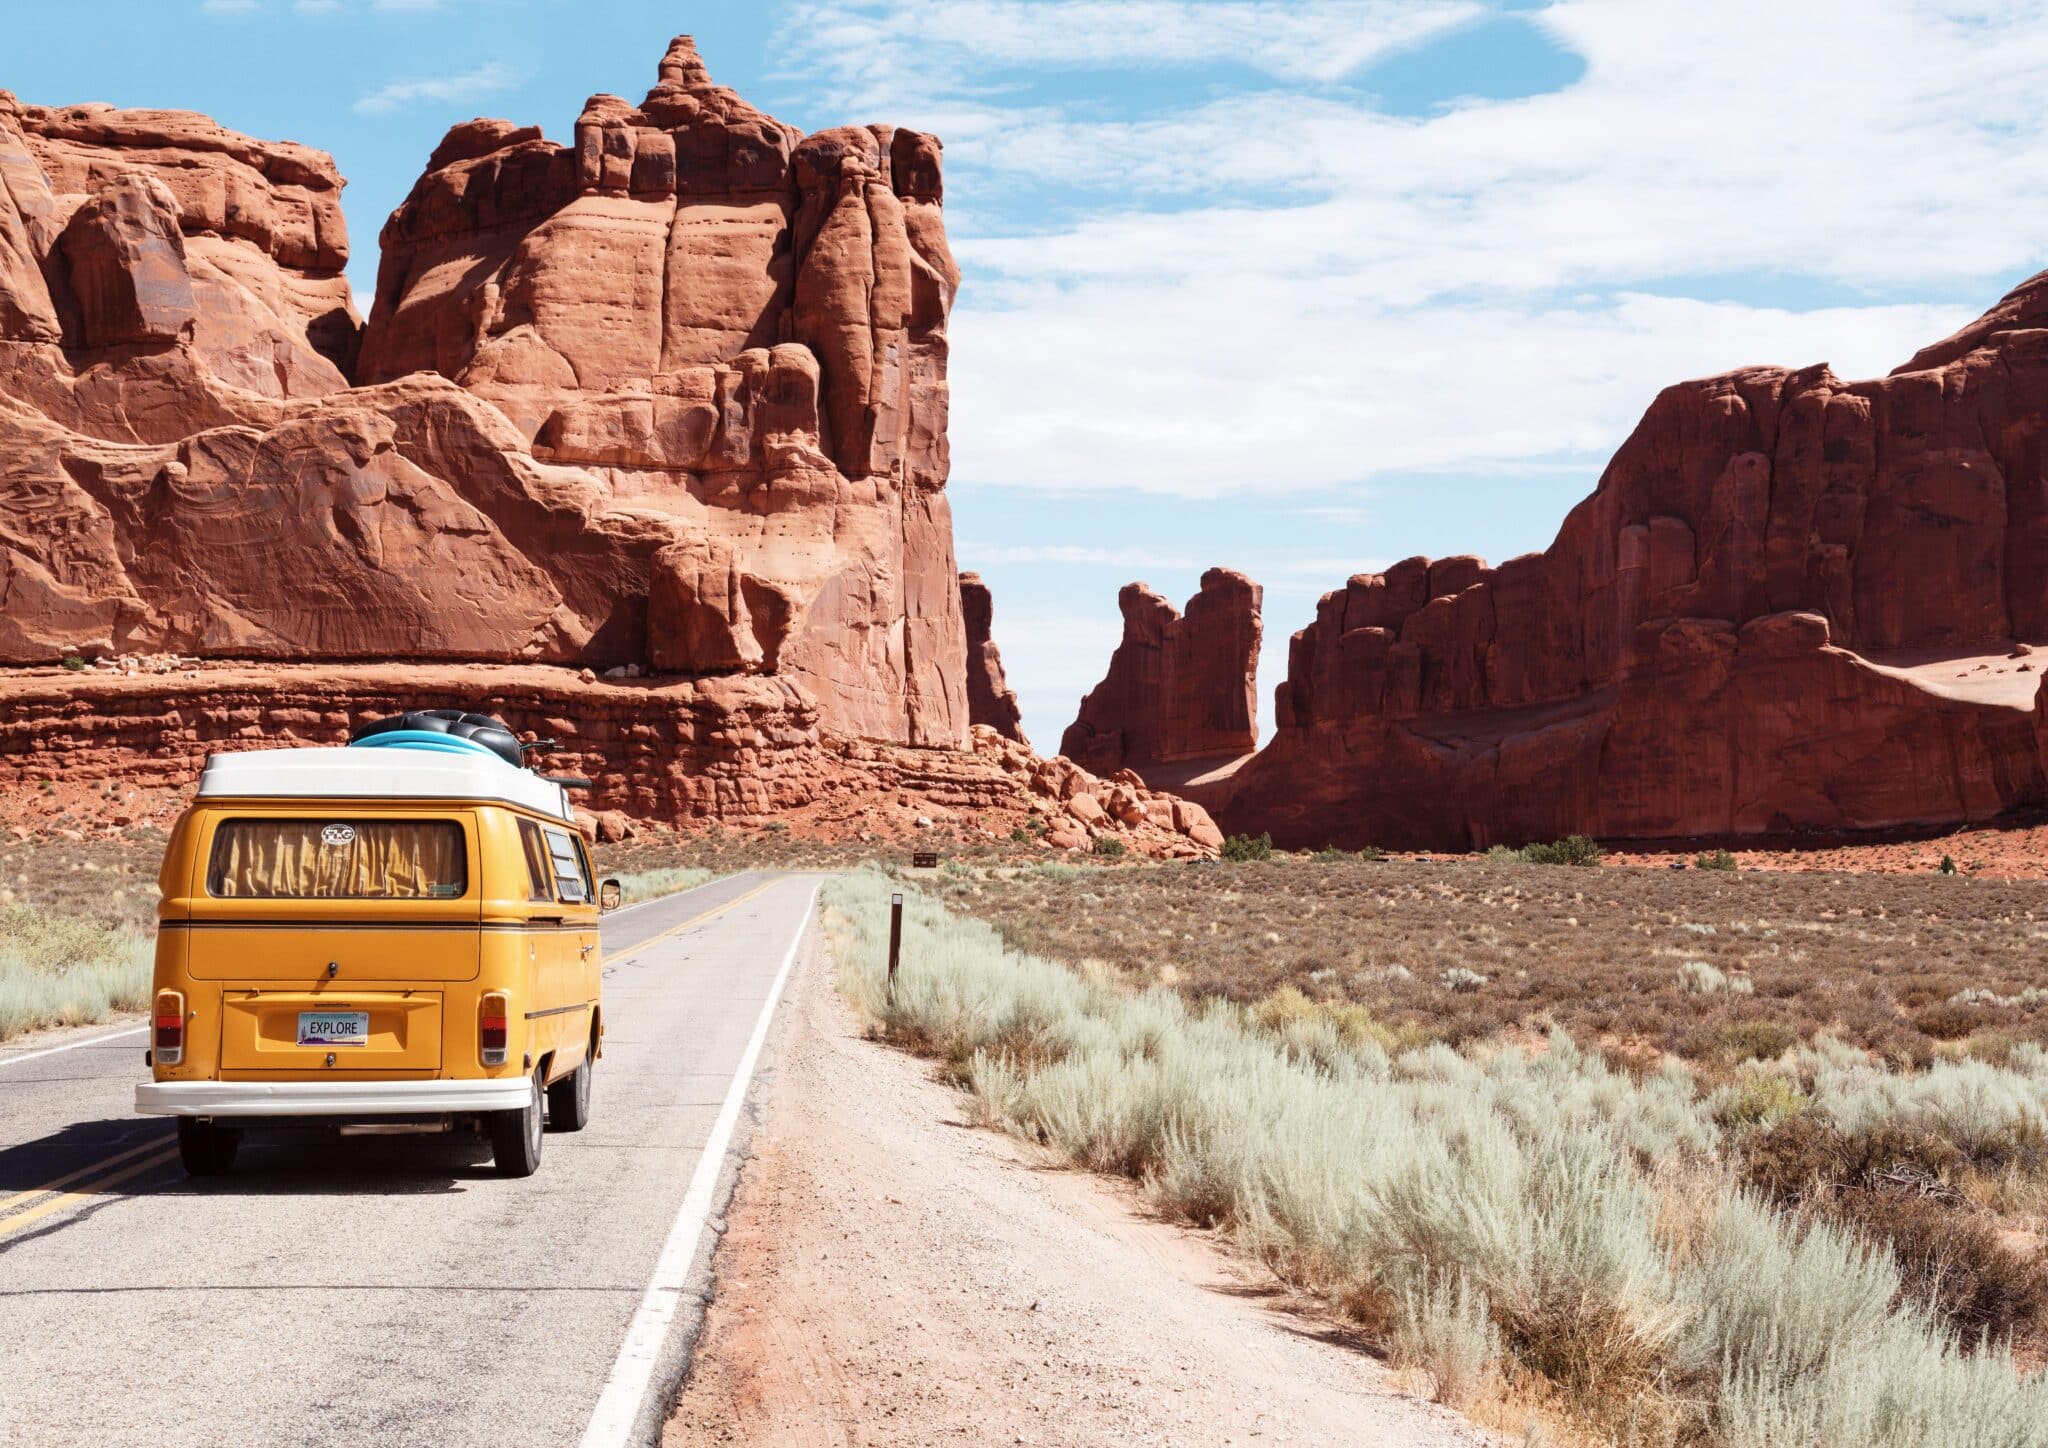 Camper bus taking a road trip through the desert near Arches National Park in Utah